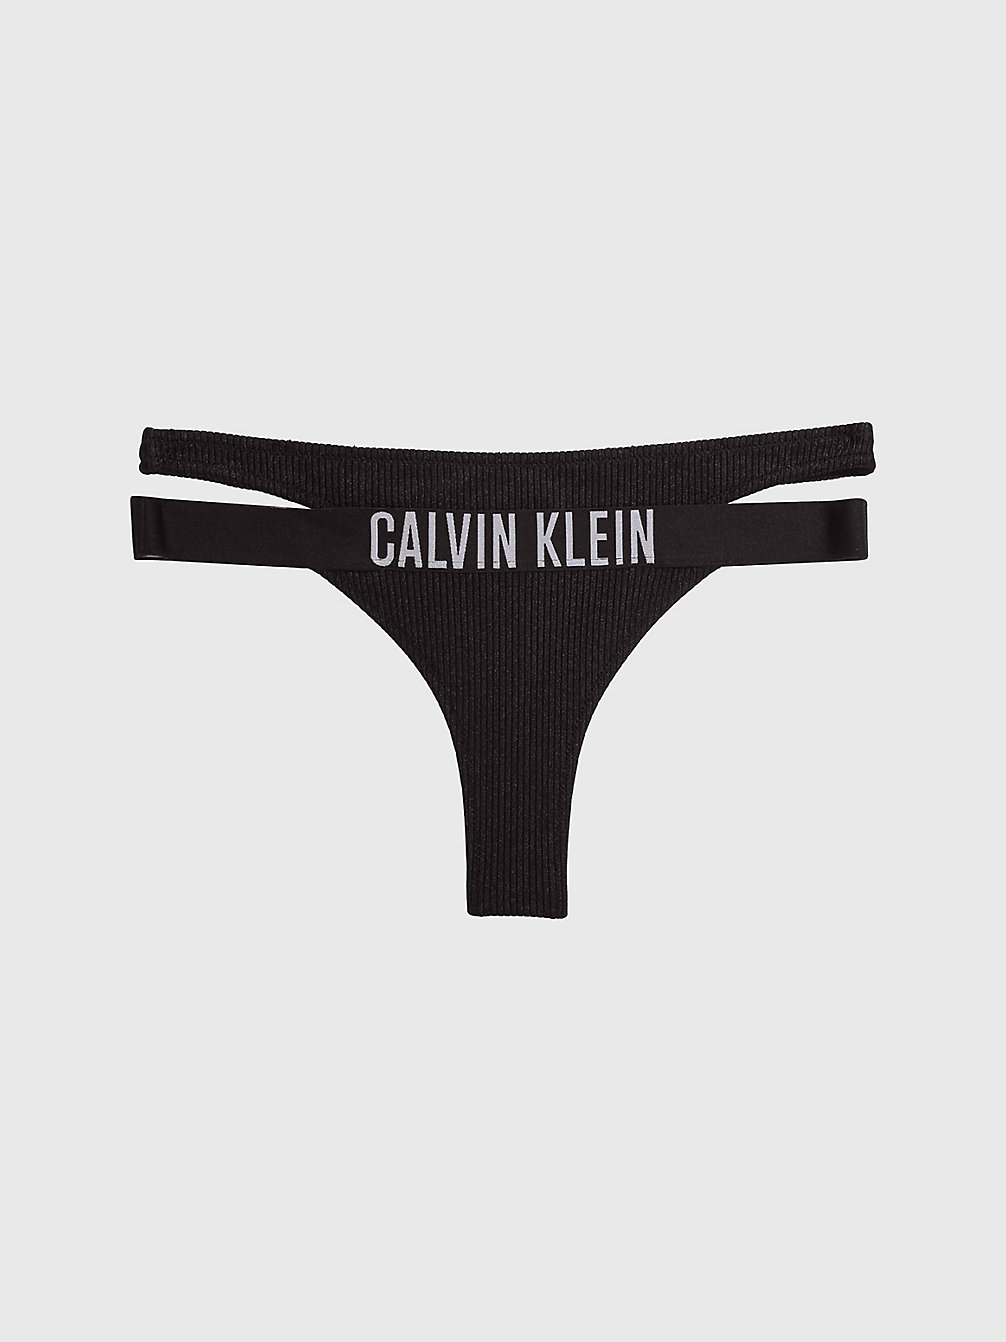 PVH BLACK Bas De Bikini String - Intense Power undefined femmes Calvin Klein